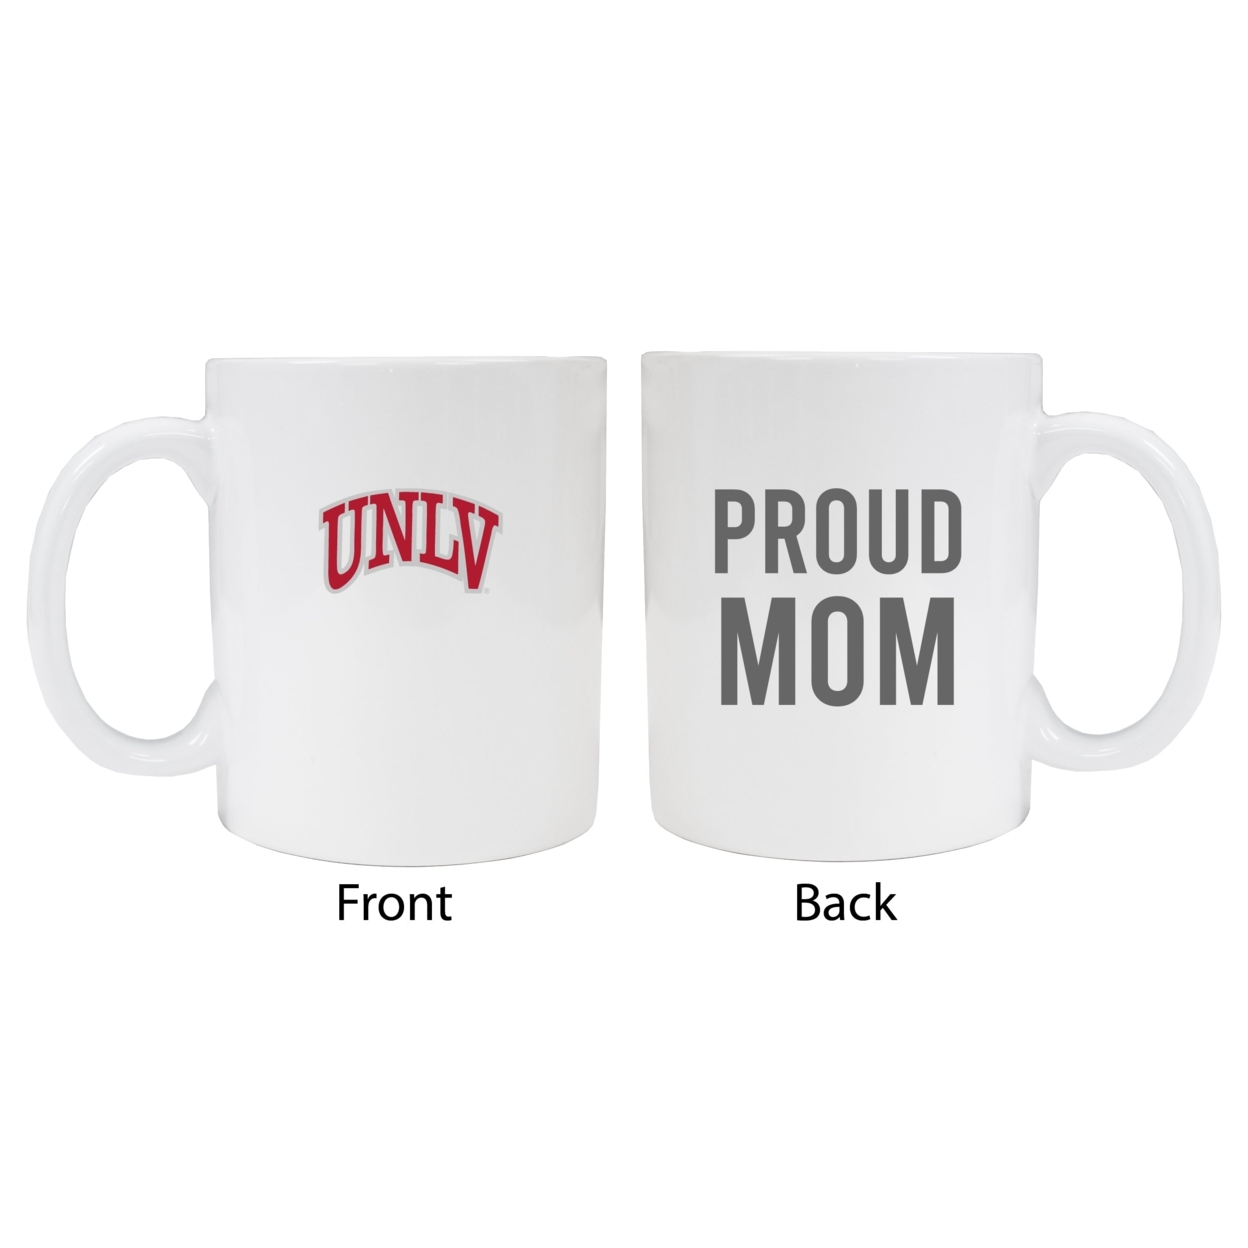 UNLV Rebels Proud Mom Ceramic Coffee Mug - White